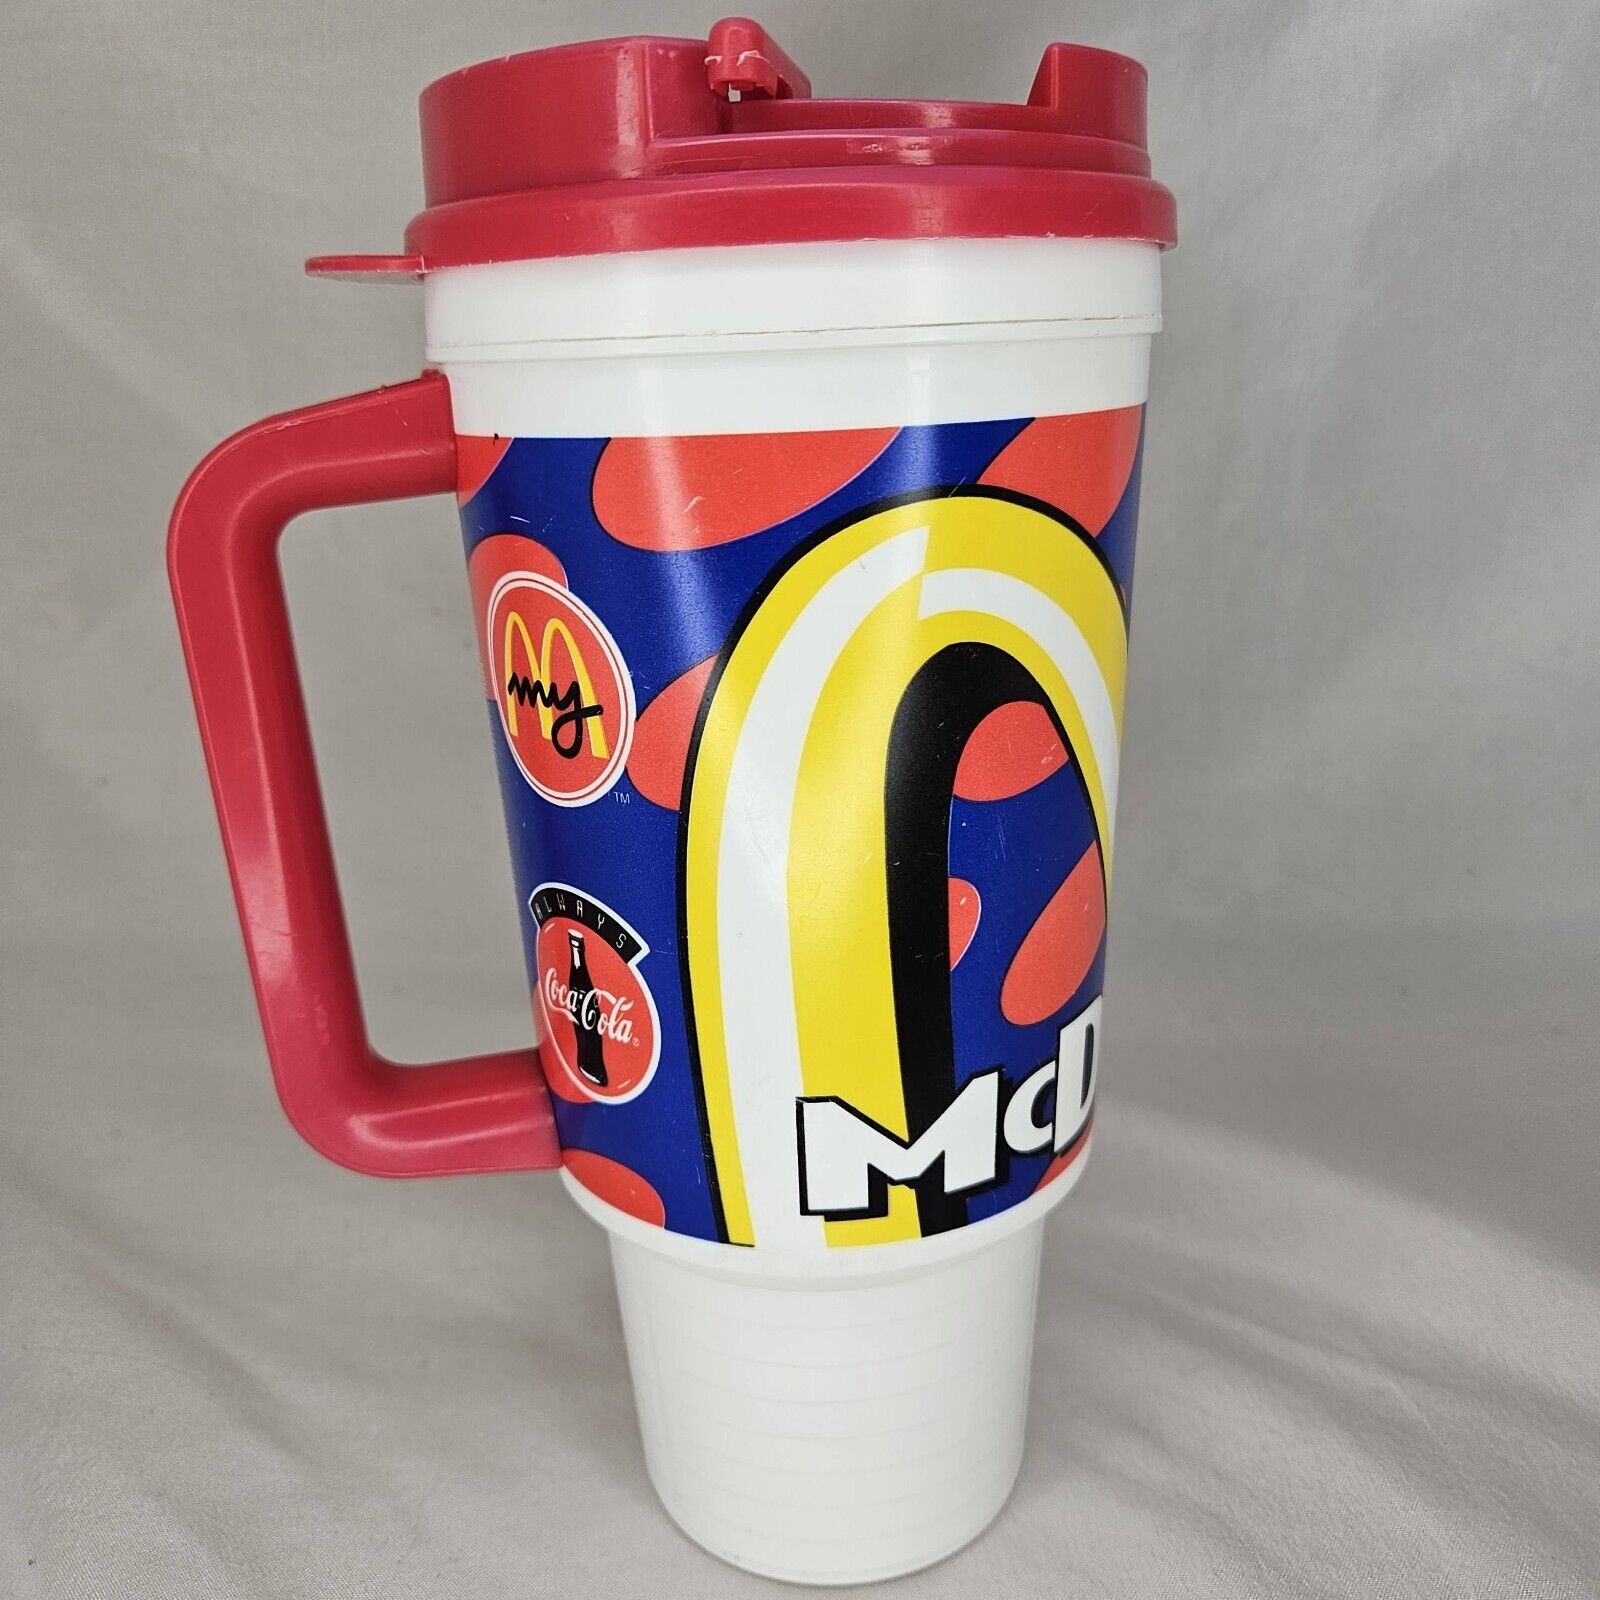 1997 Rare Vintage Mcdonalds Travel mug